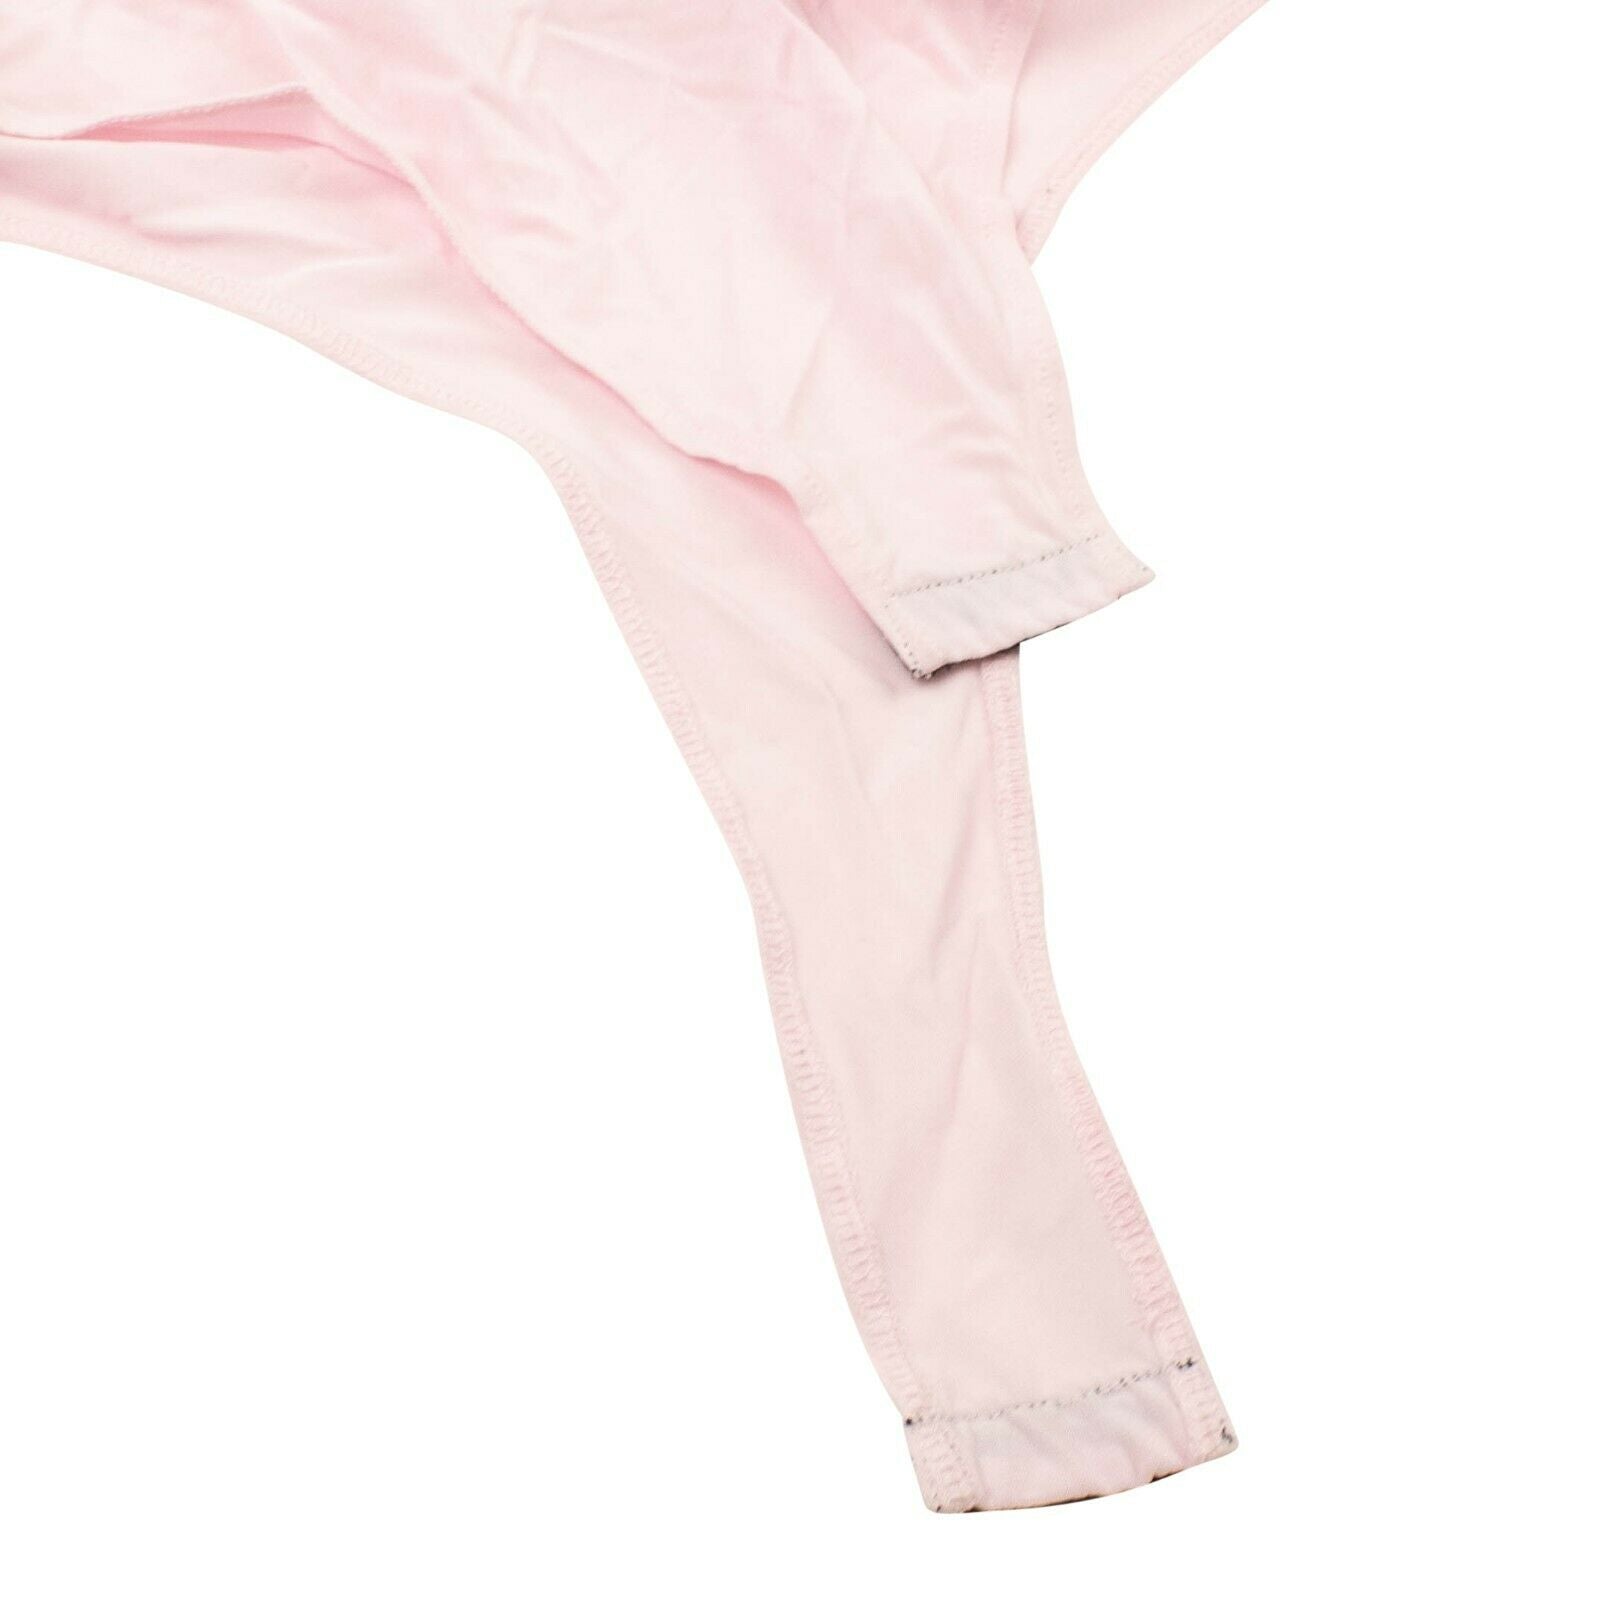 Unravel Project Body Sweatshirt - Pink